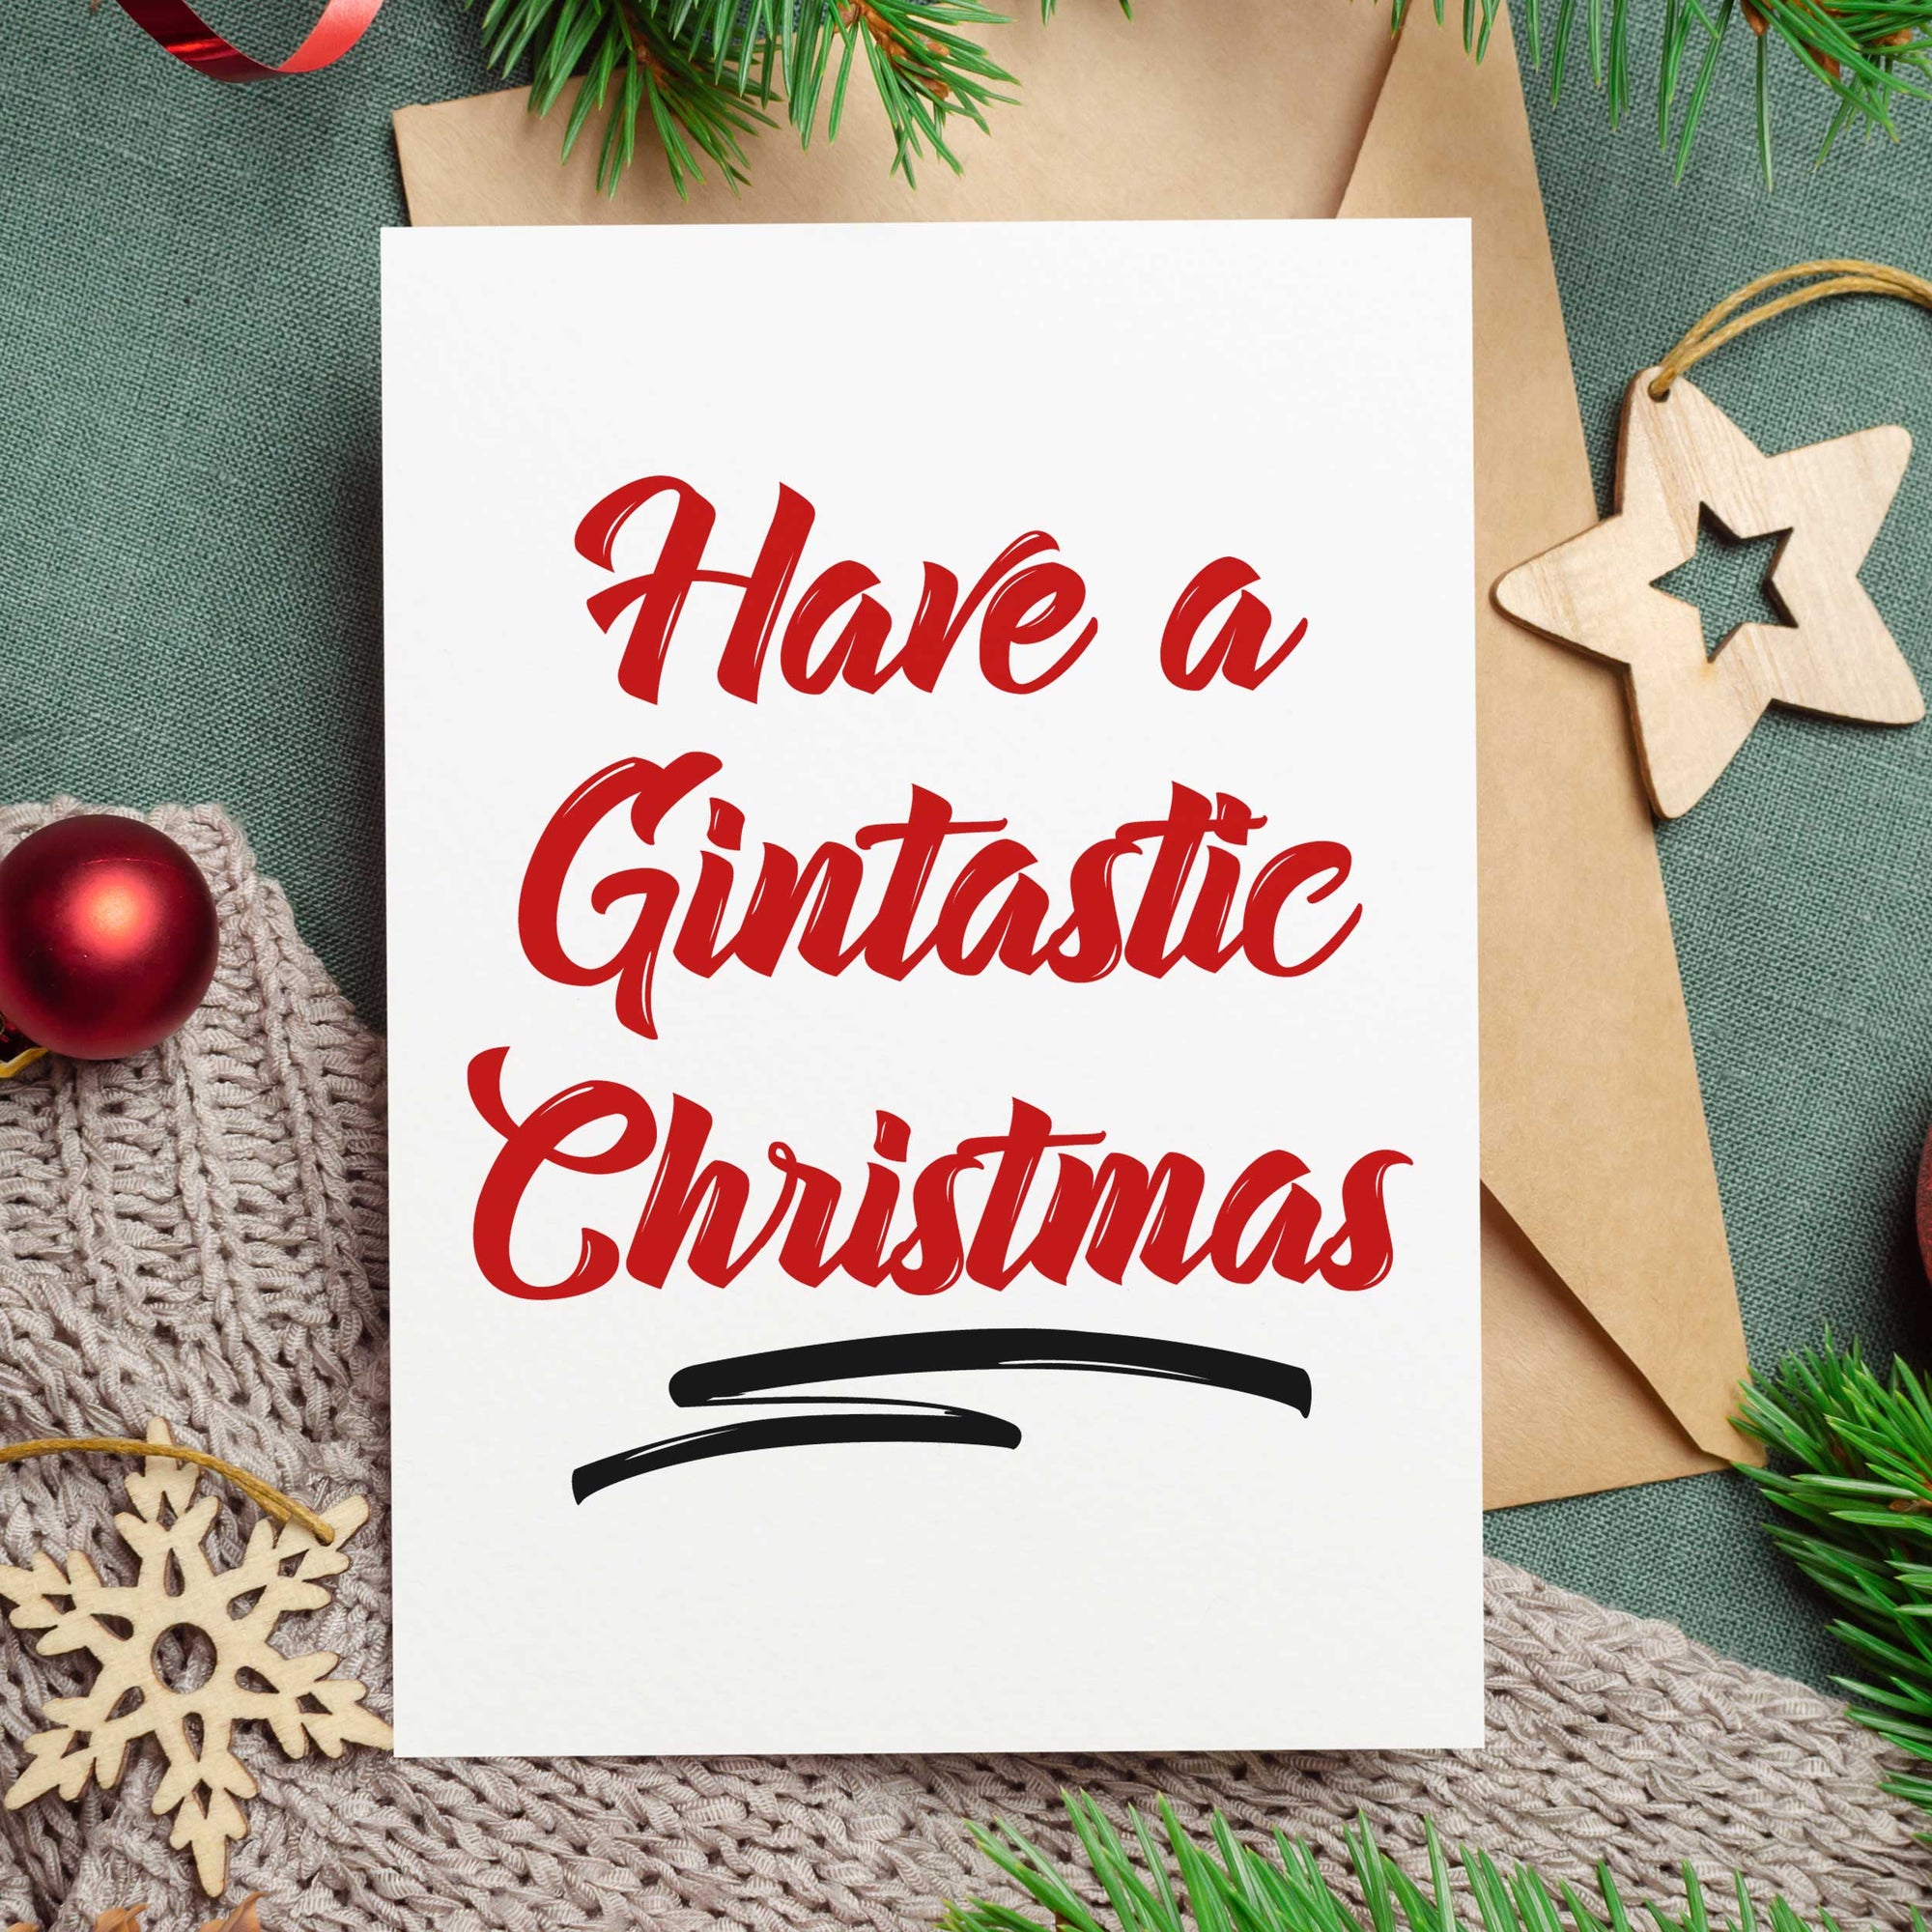 Have A Gintastic Christmas - Christmas Card